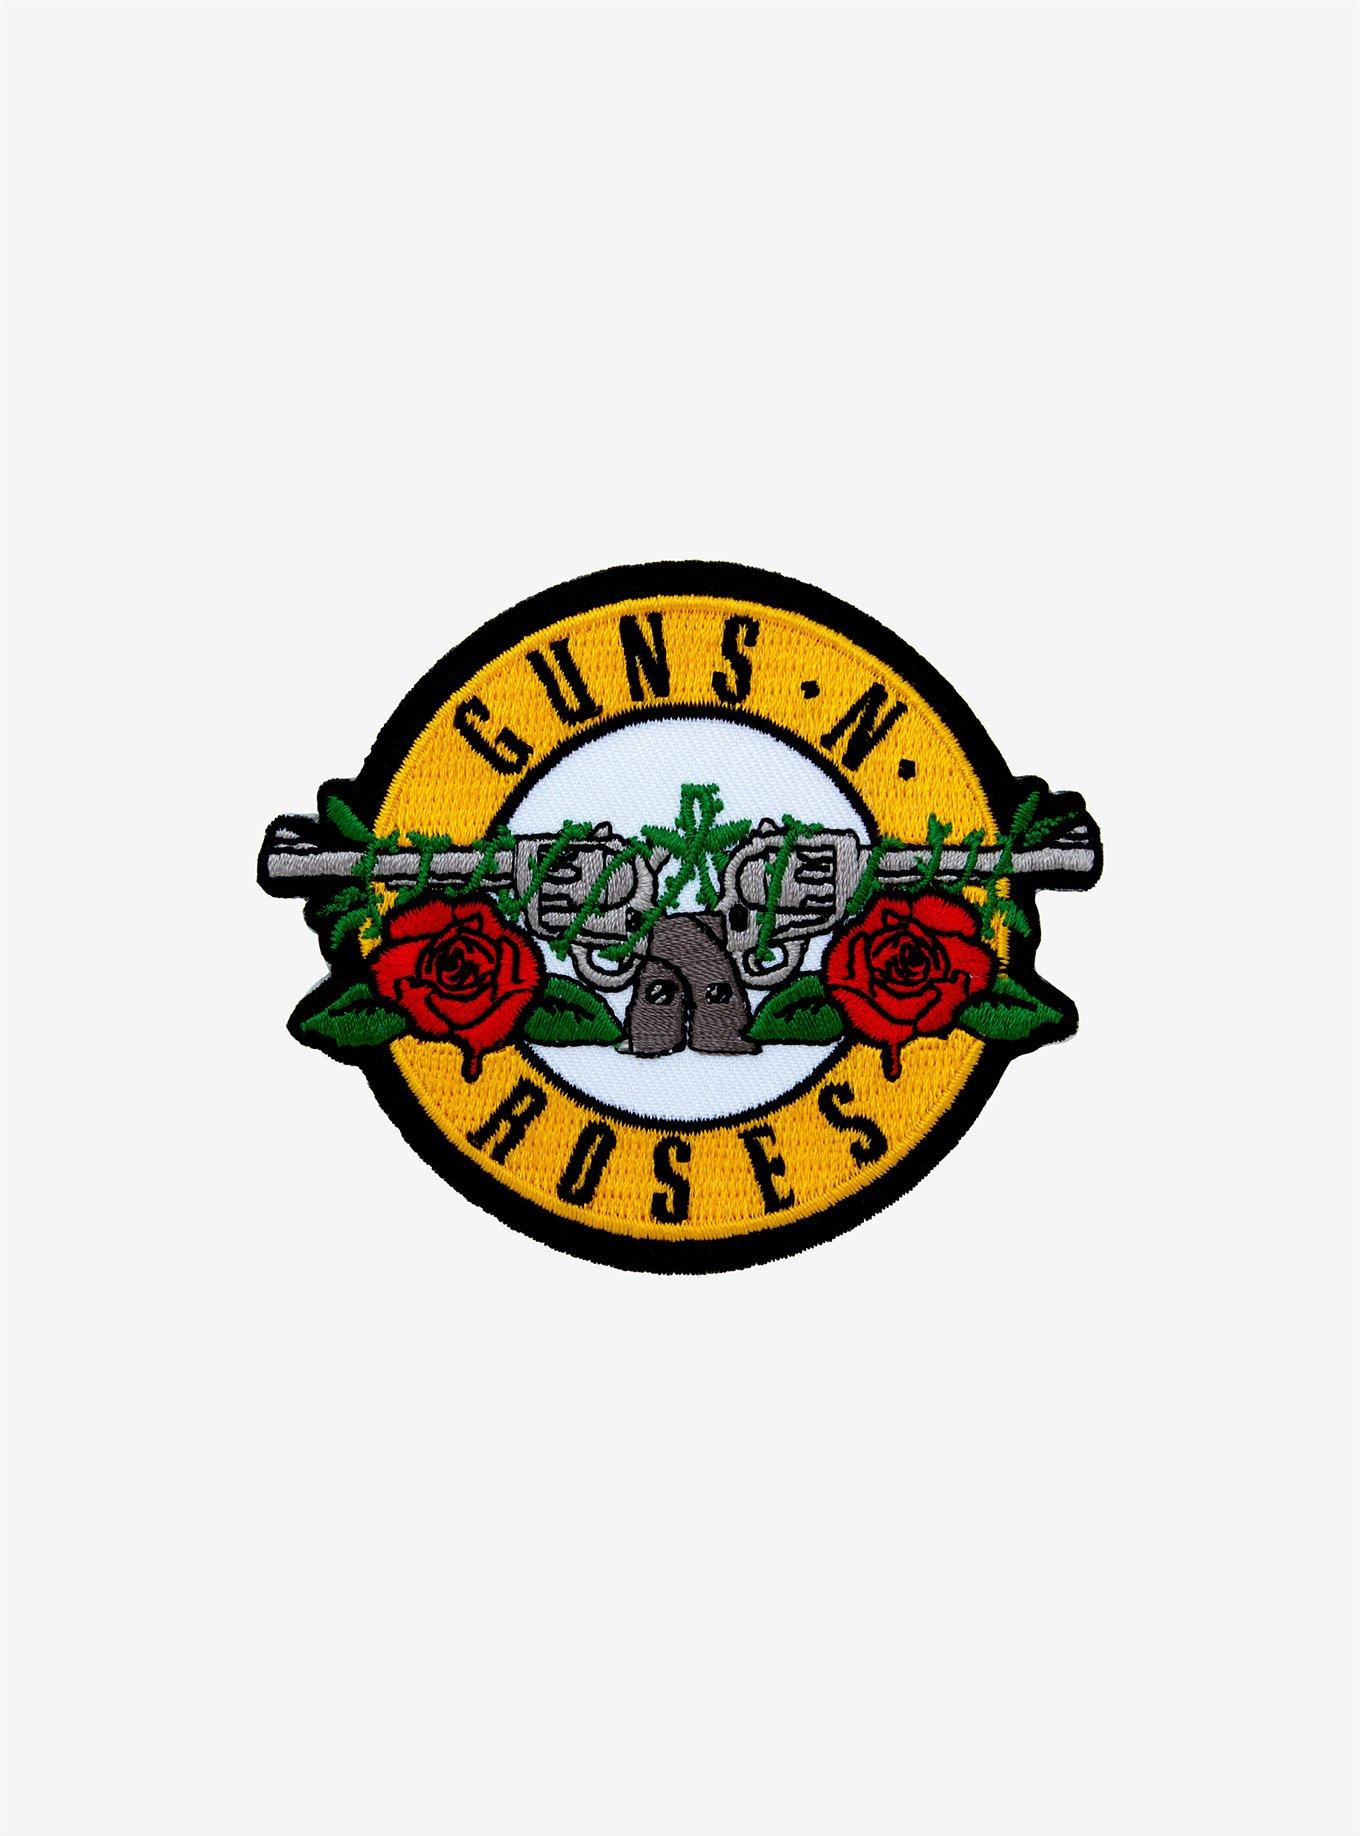 Guns N' Roses Logo Patch 